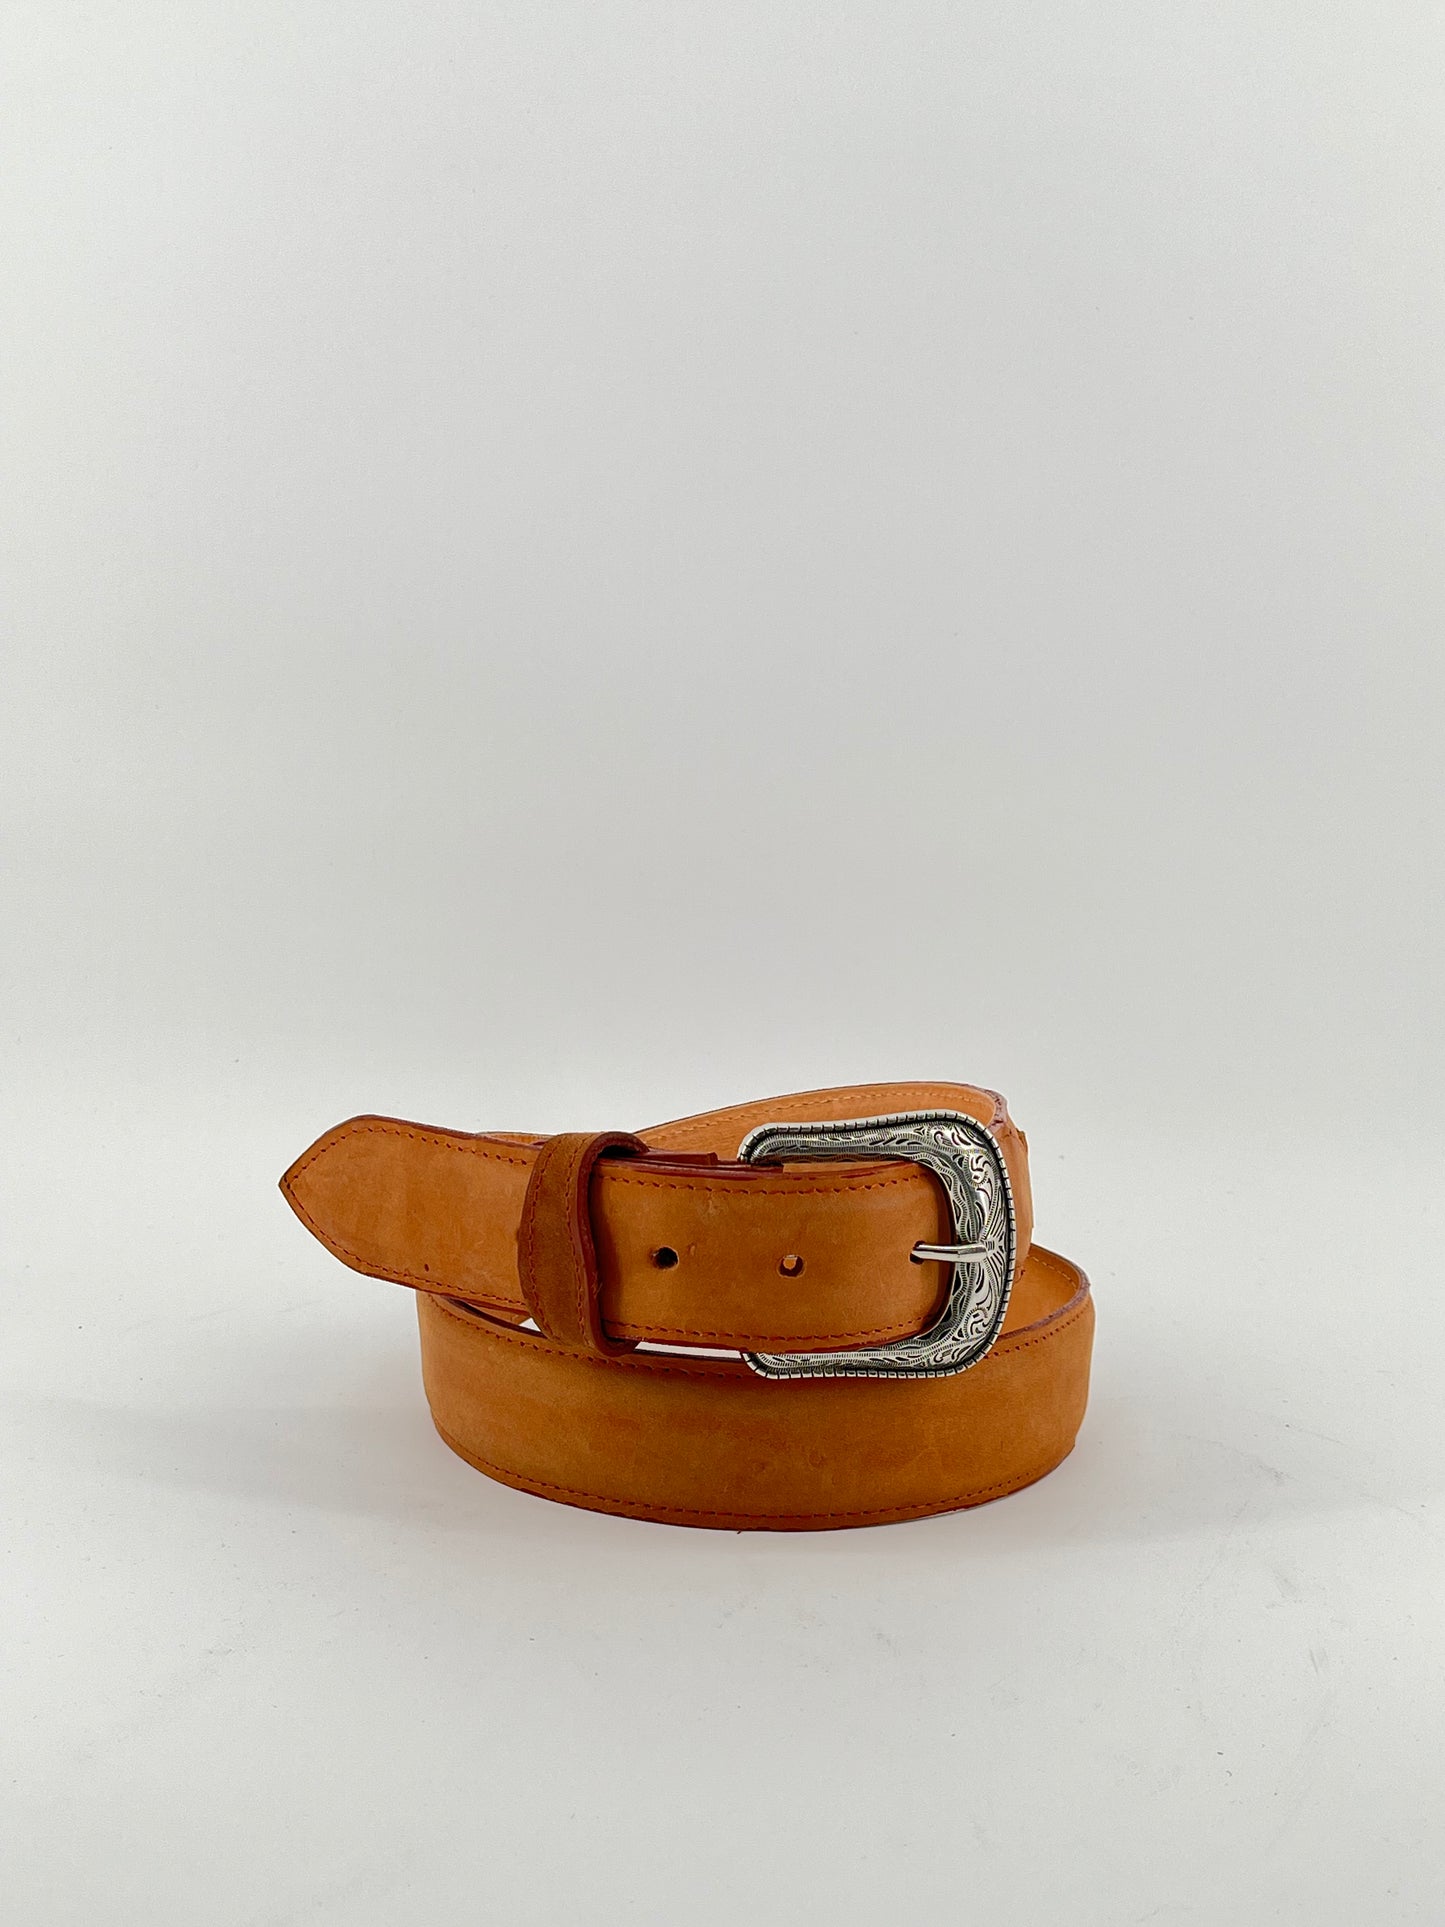 Jimenez Leather Cowboy Belt